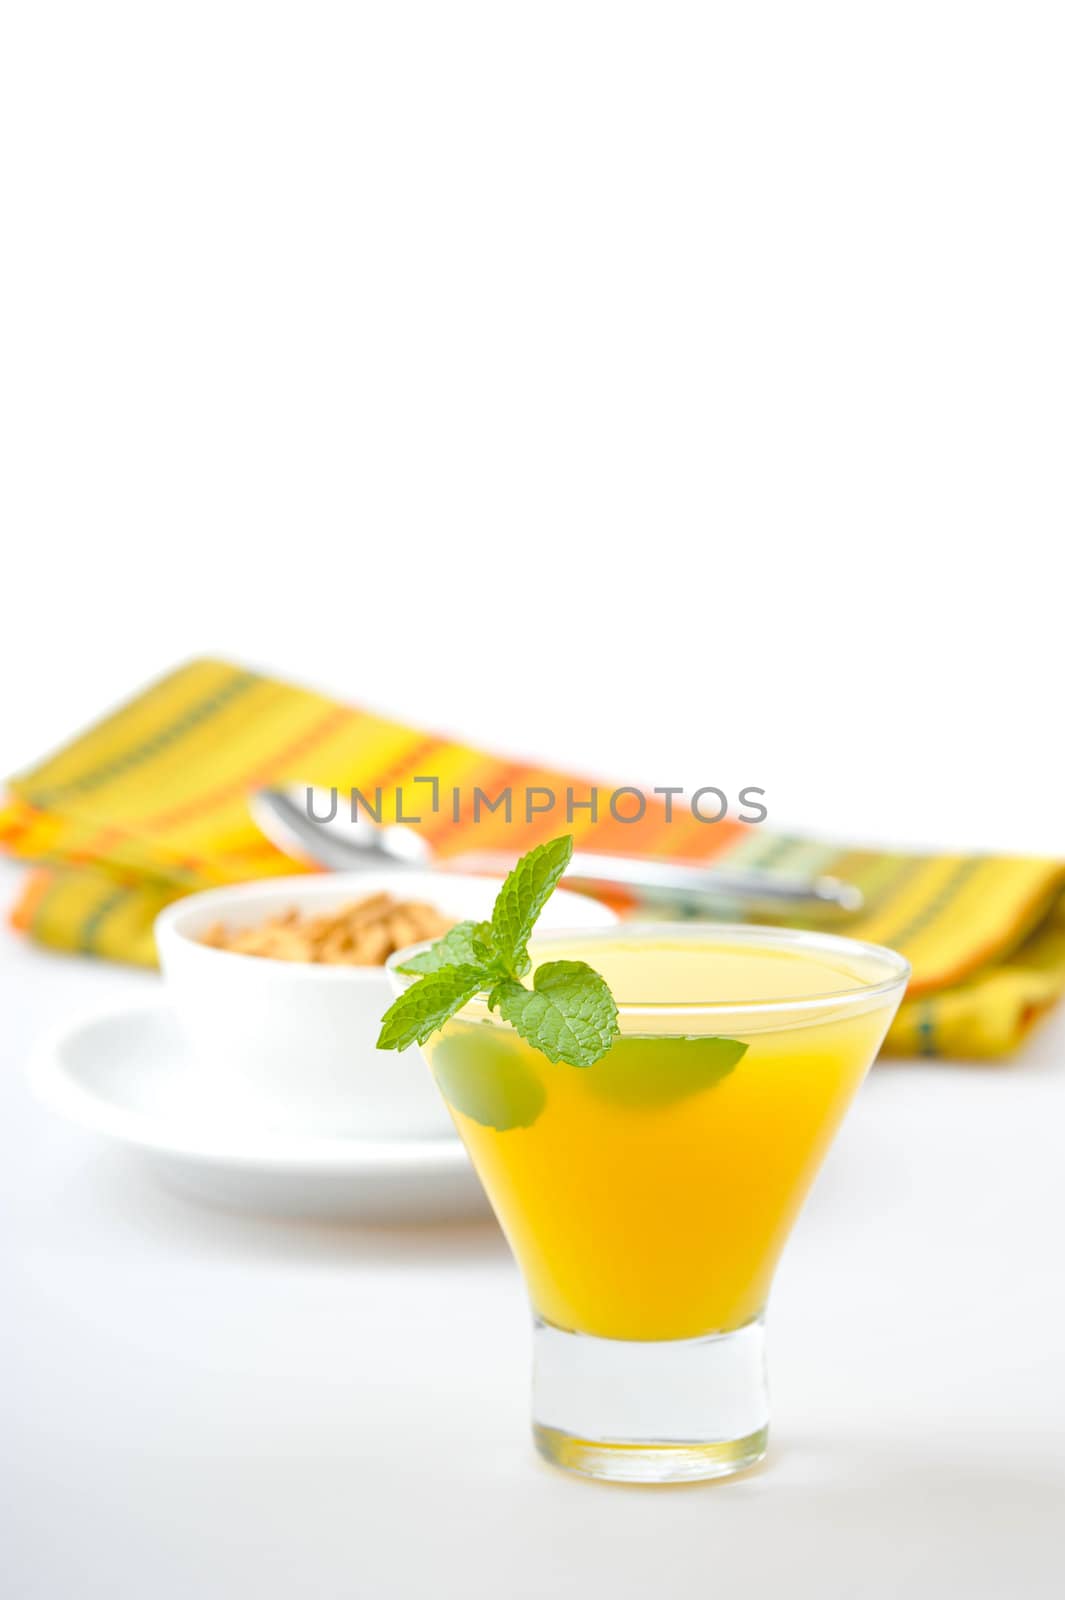 Glass of fresh orange juice garnished with a sprig of mint.